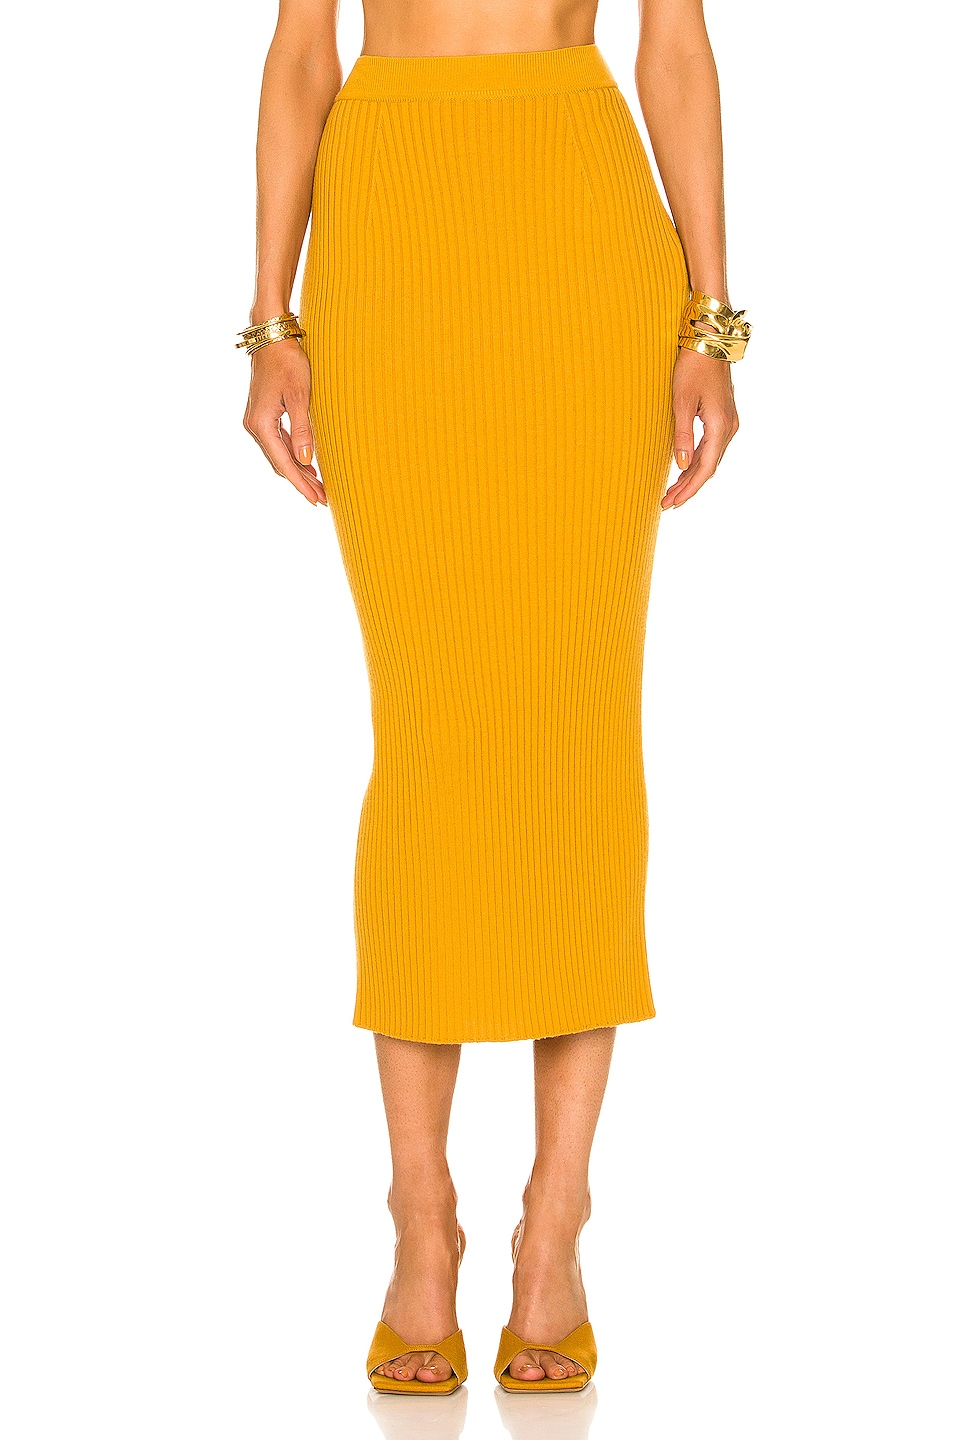 Chloe Knit Skirt in Sunlight Yellow | FWRD